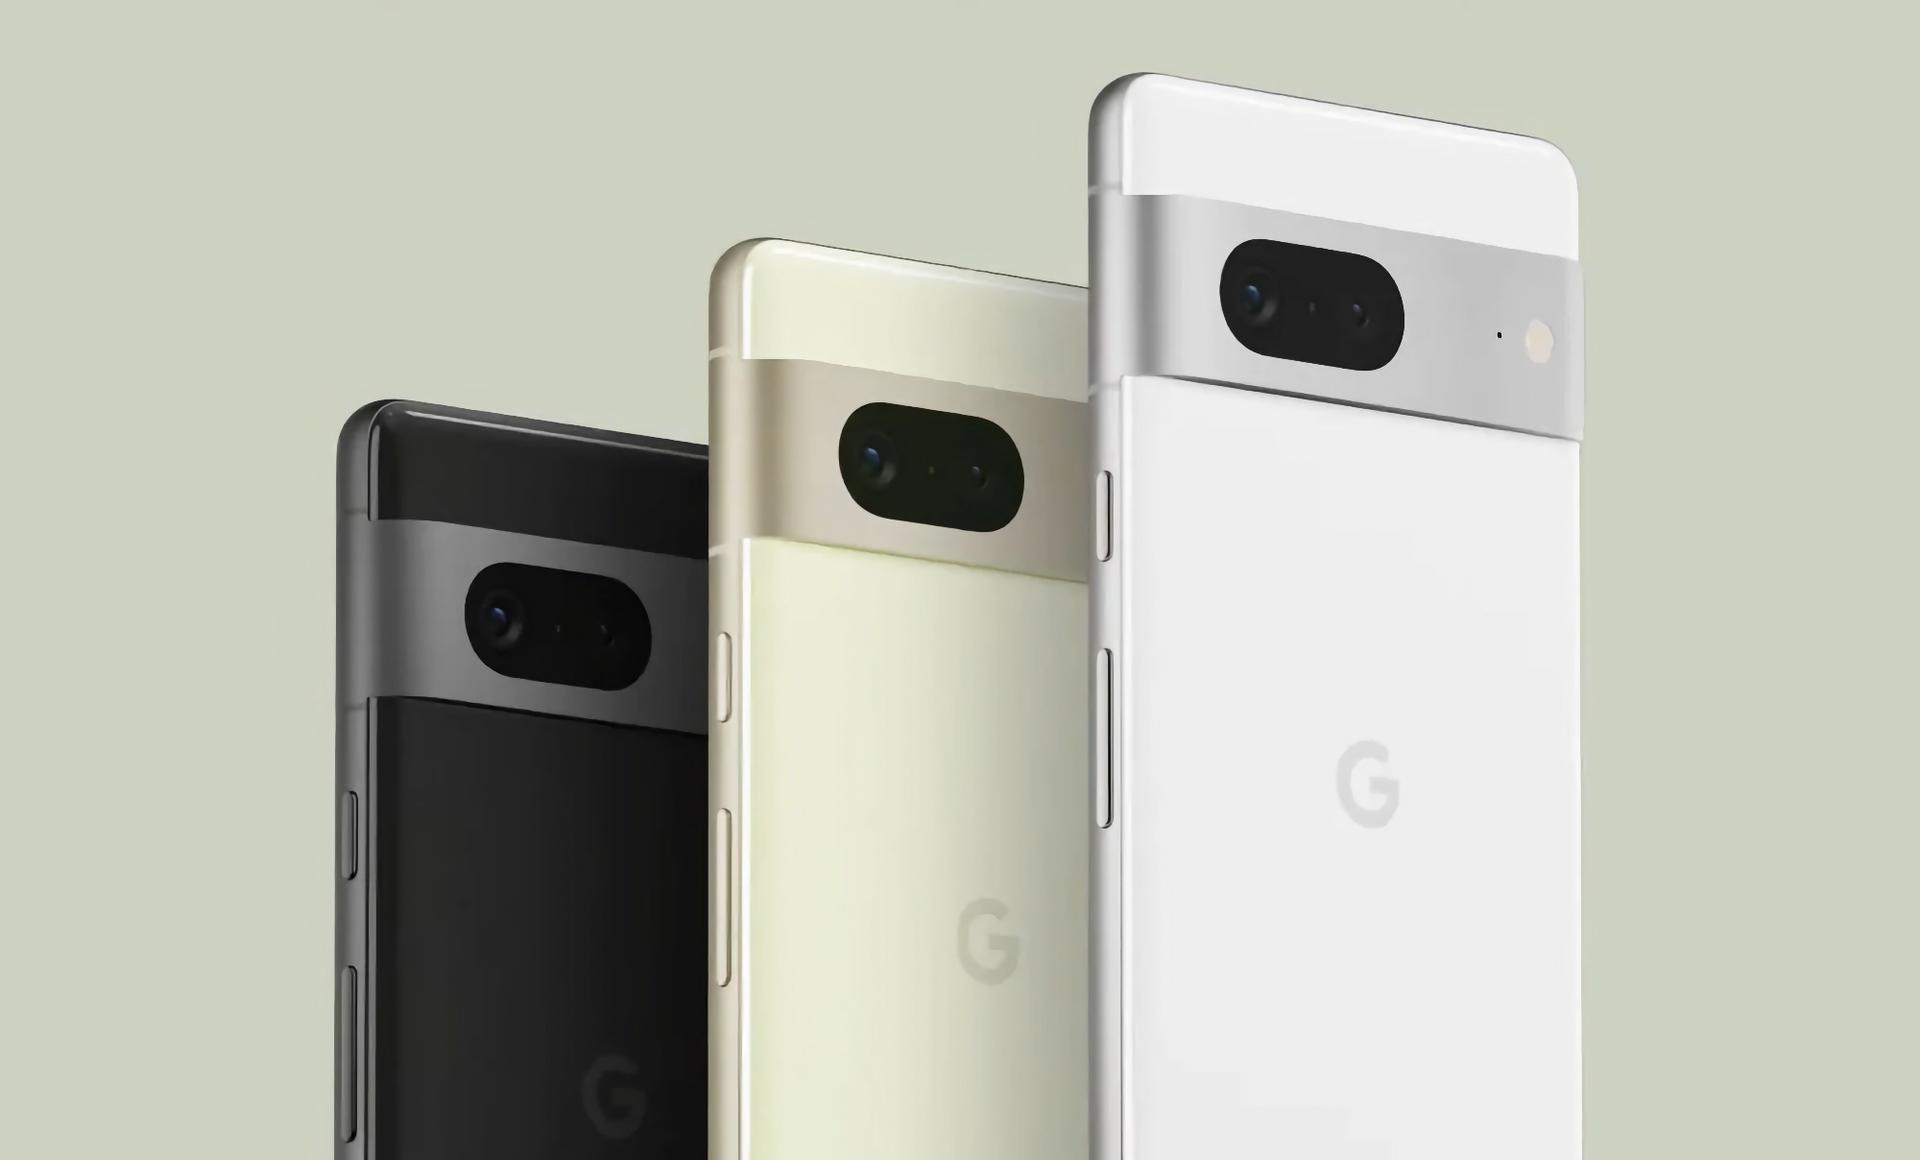 Insider Google Pixel 7a will get a 90 Hz display, wireless charging